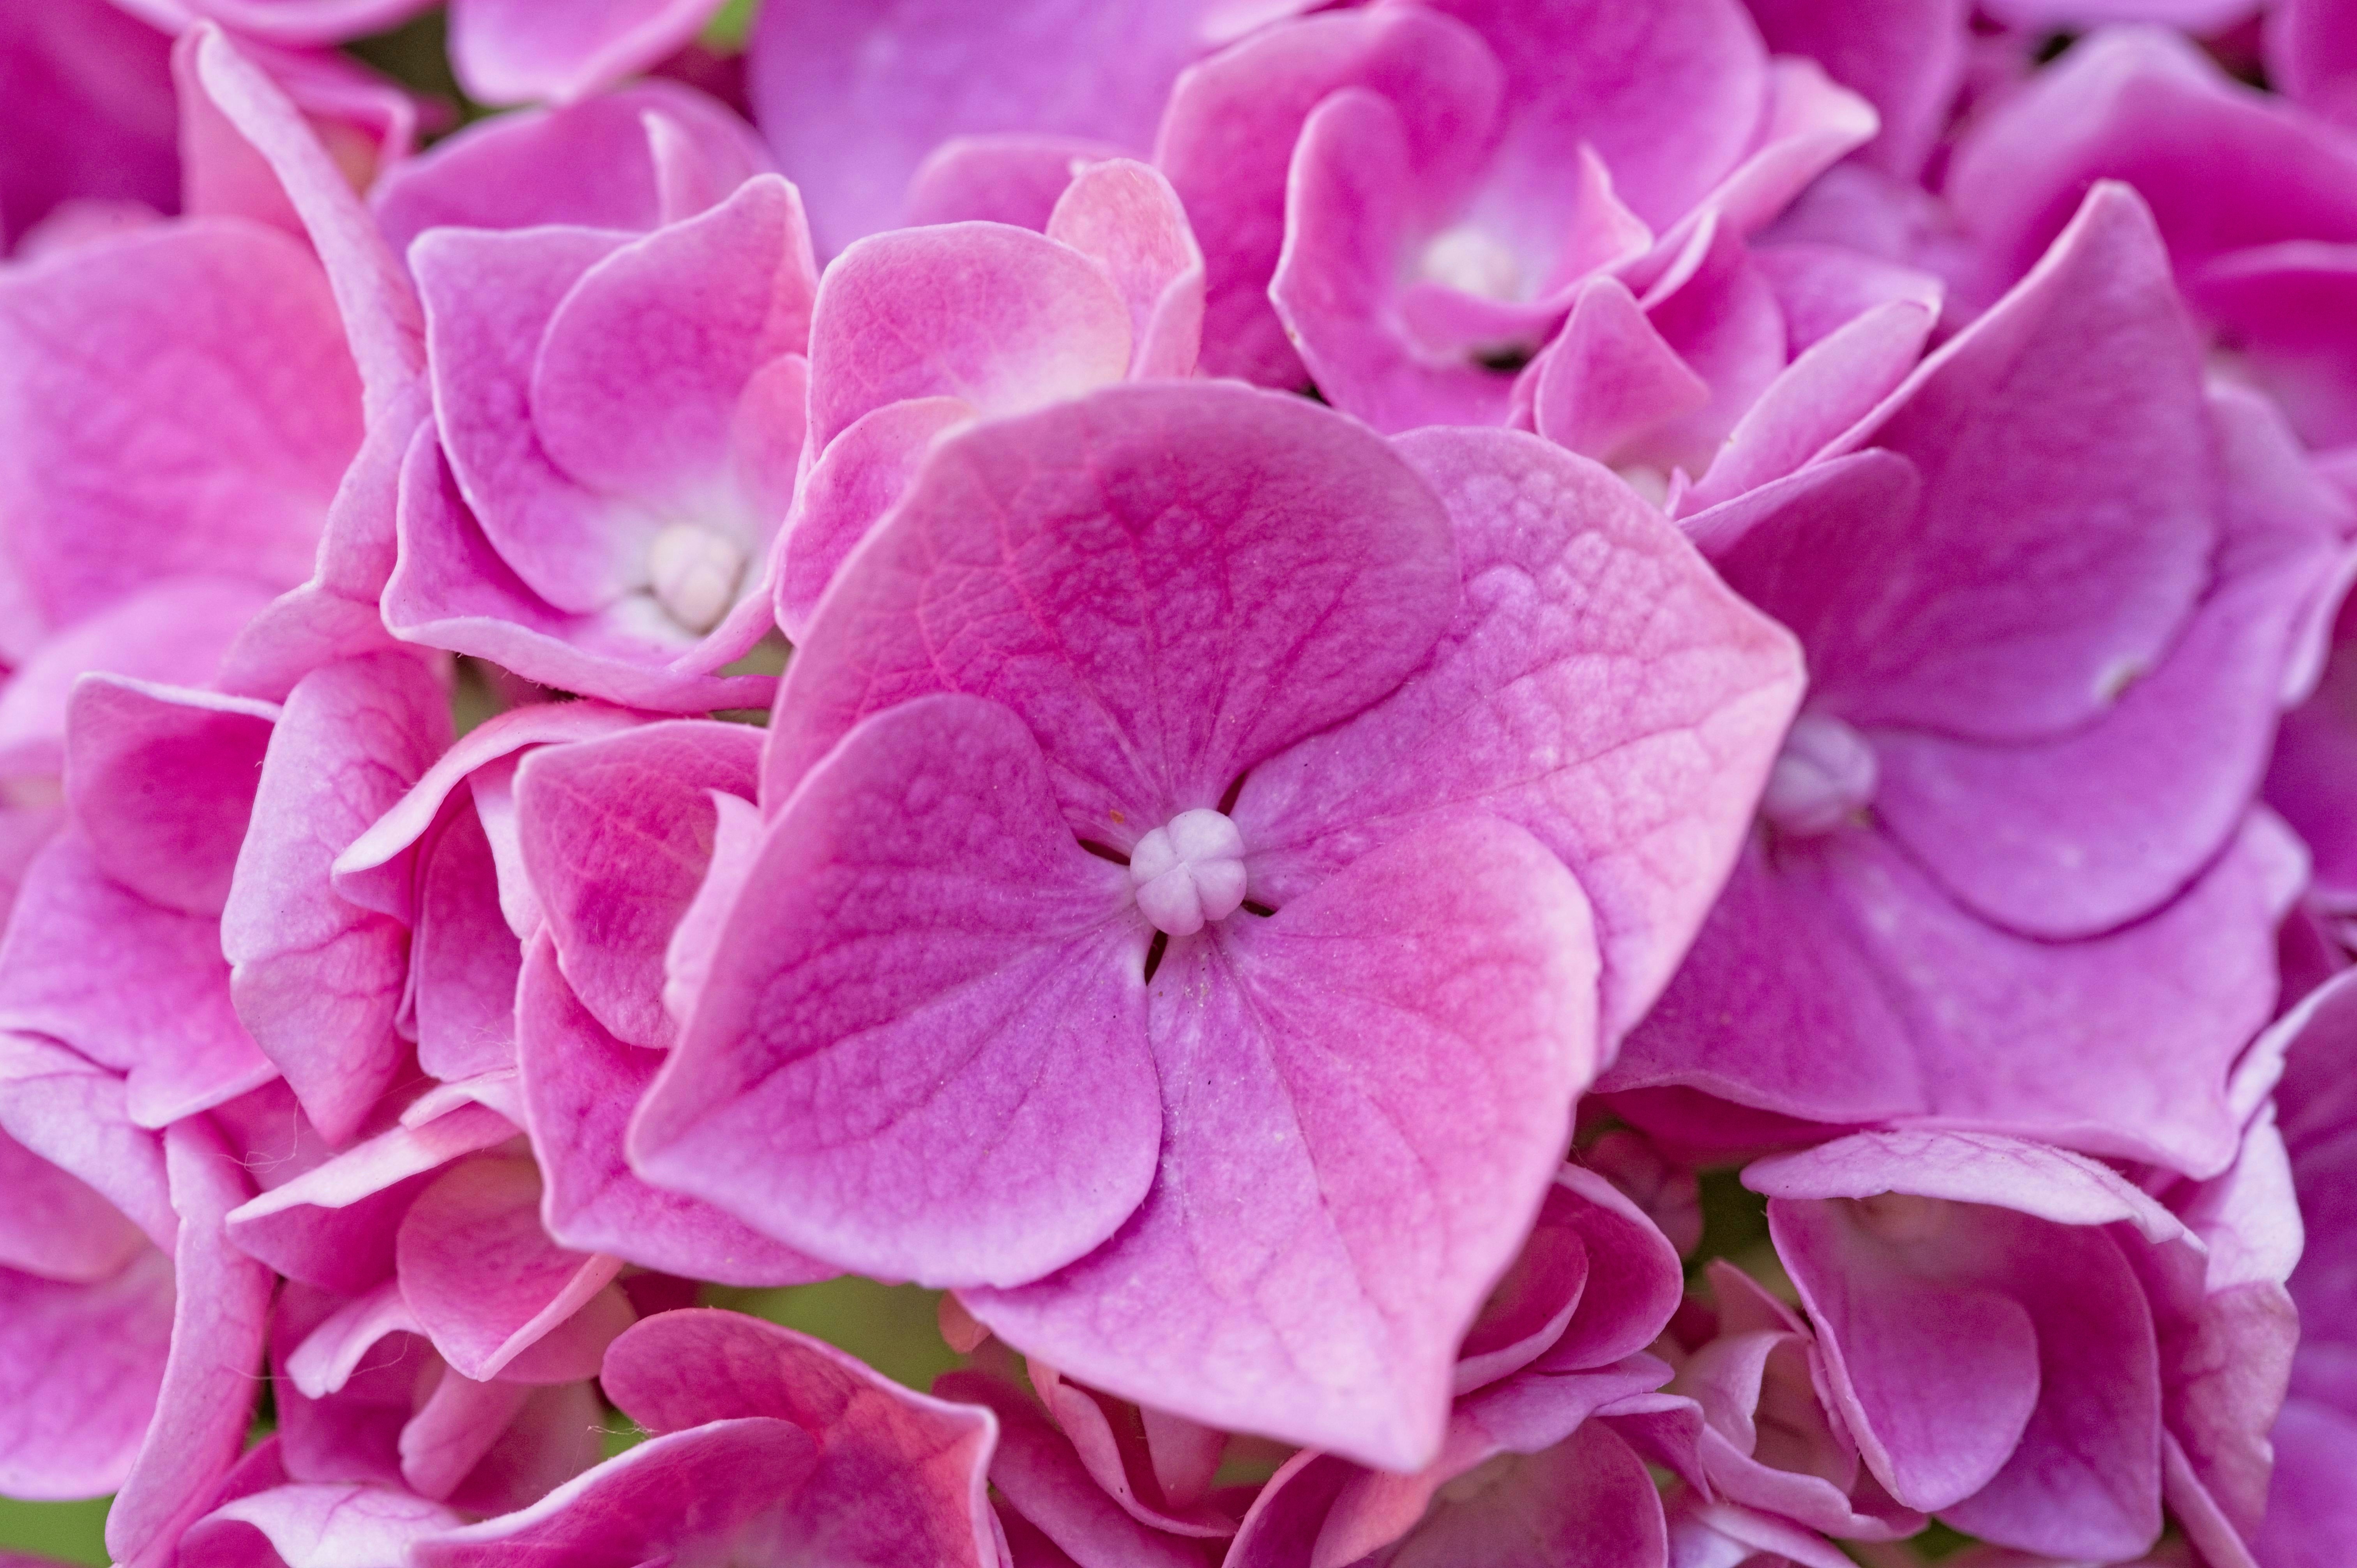 Image of Pink Hydrangeas in a Macro Shot